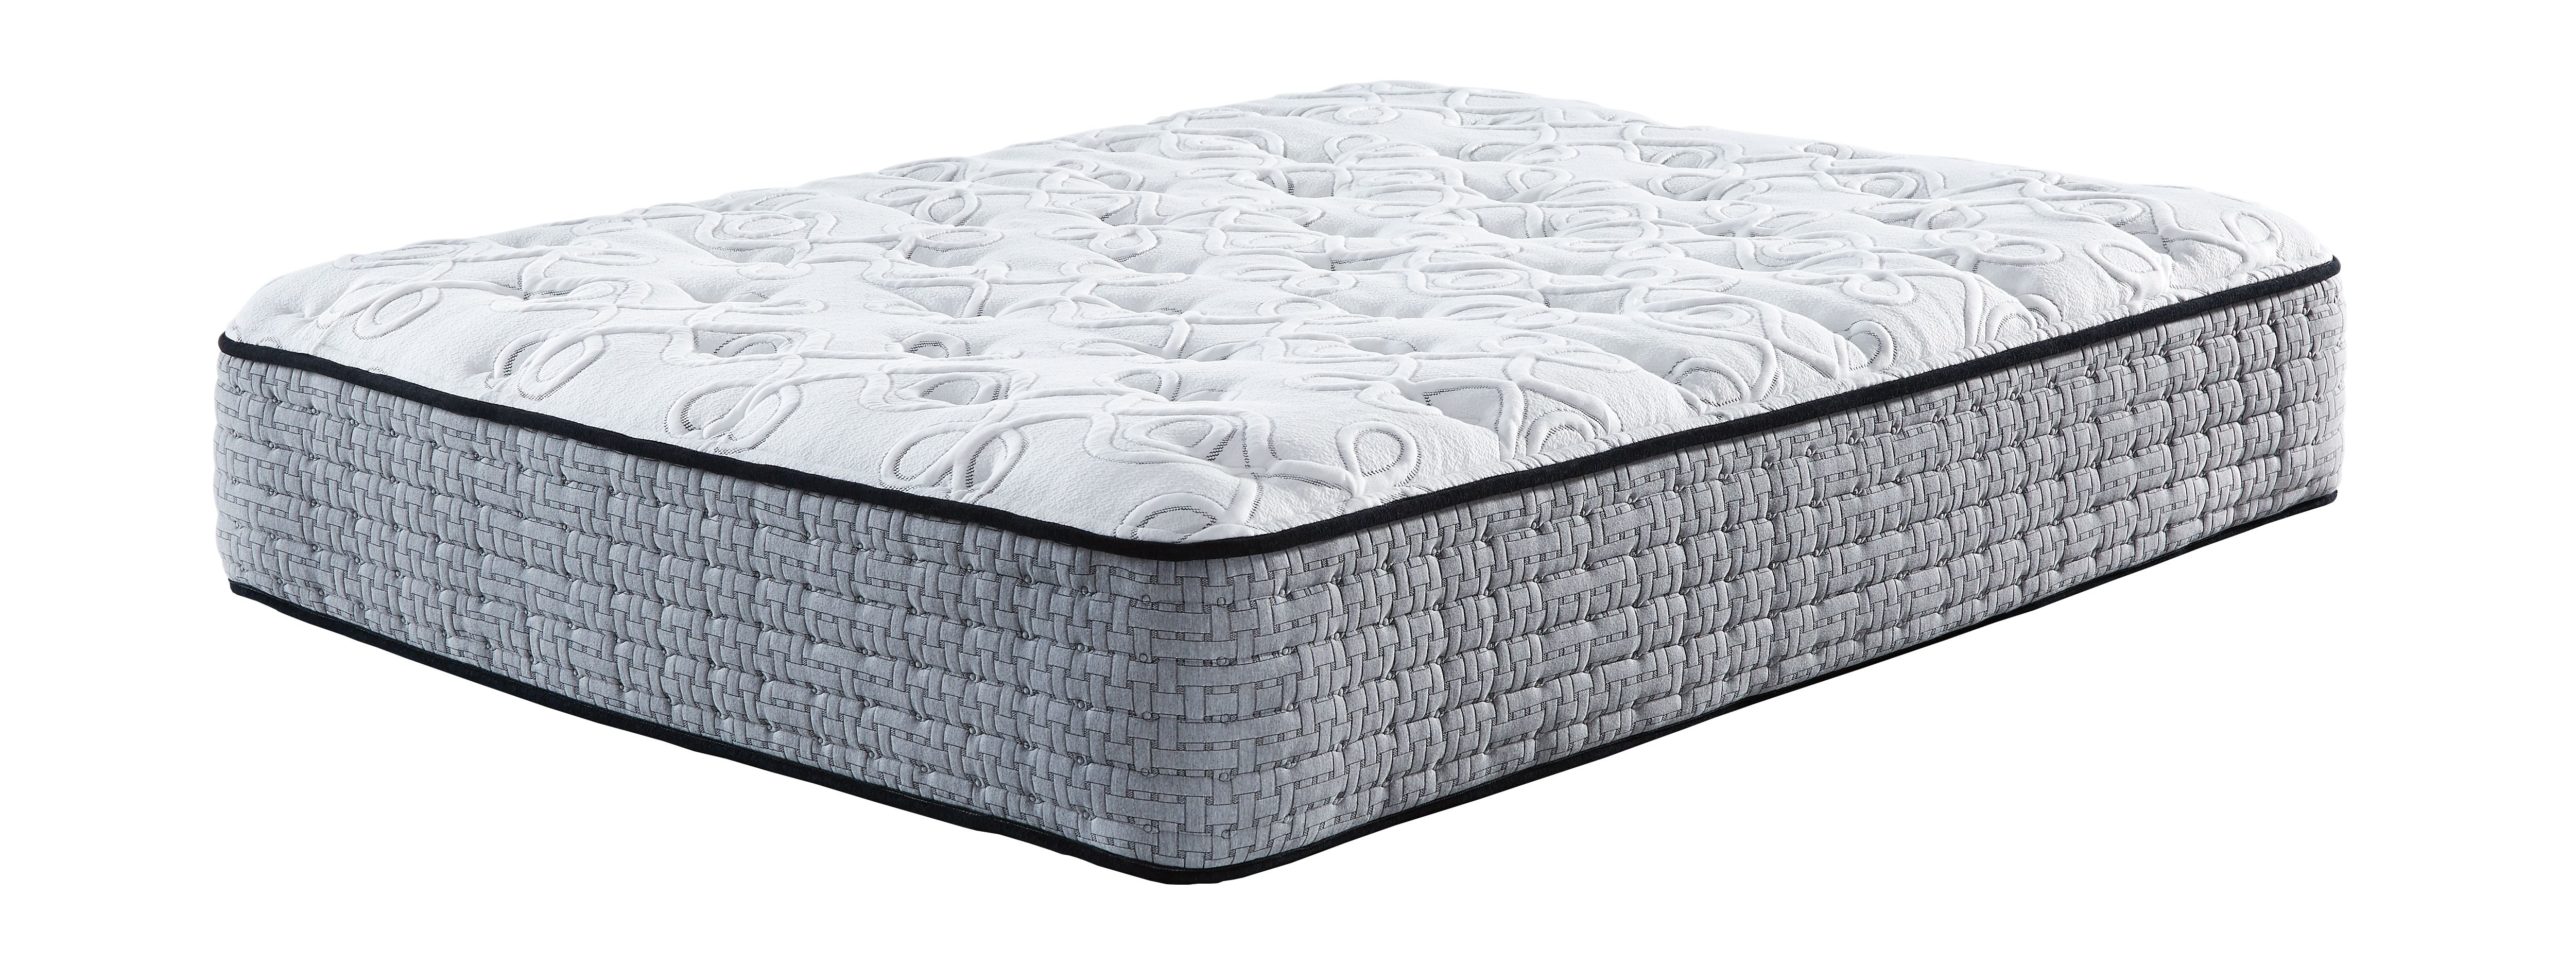 white queen mattress cover